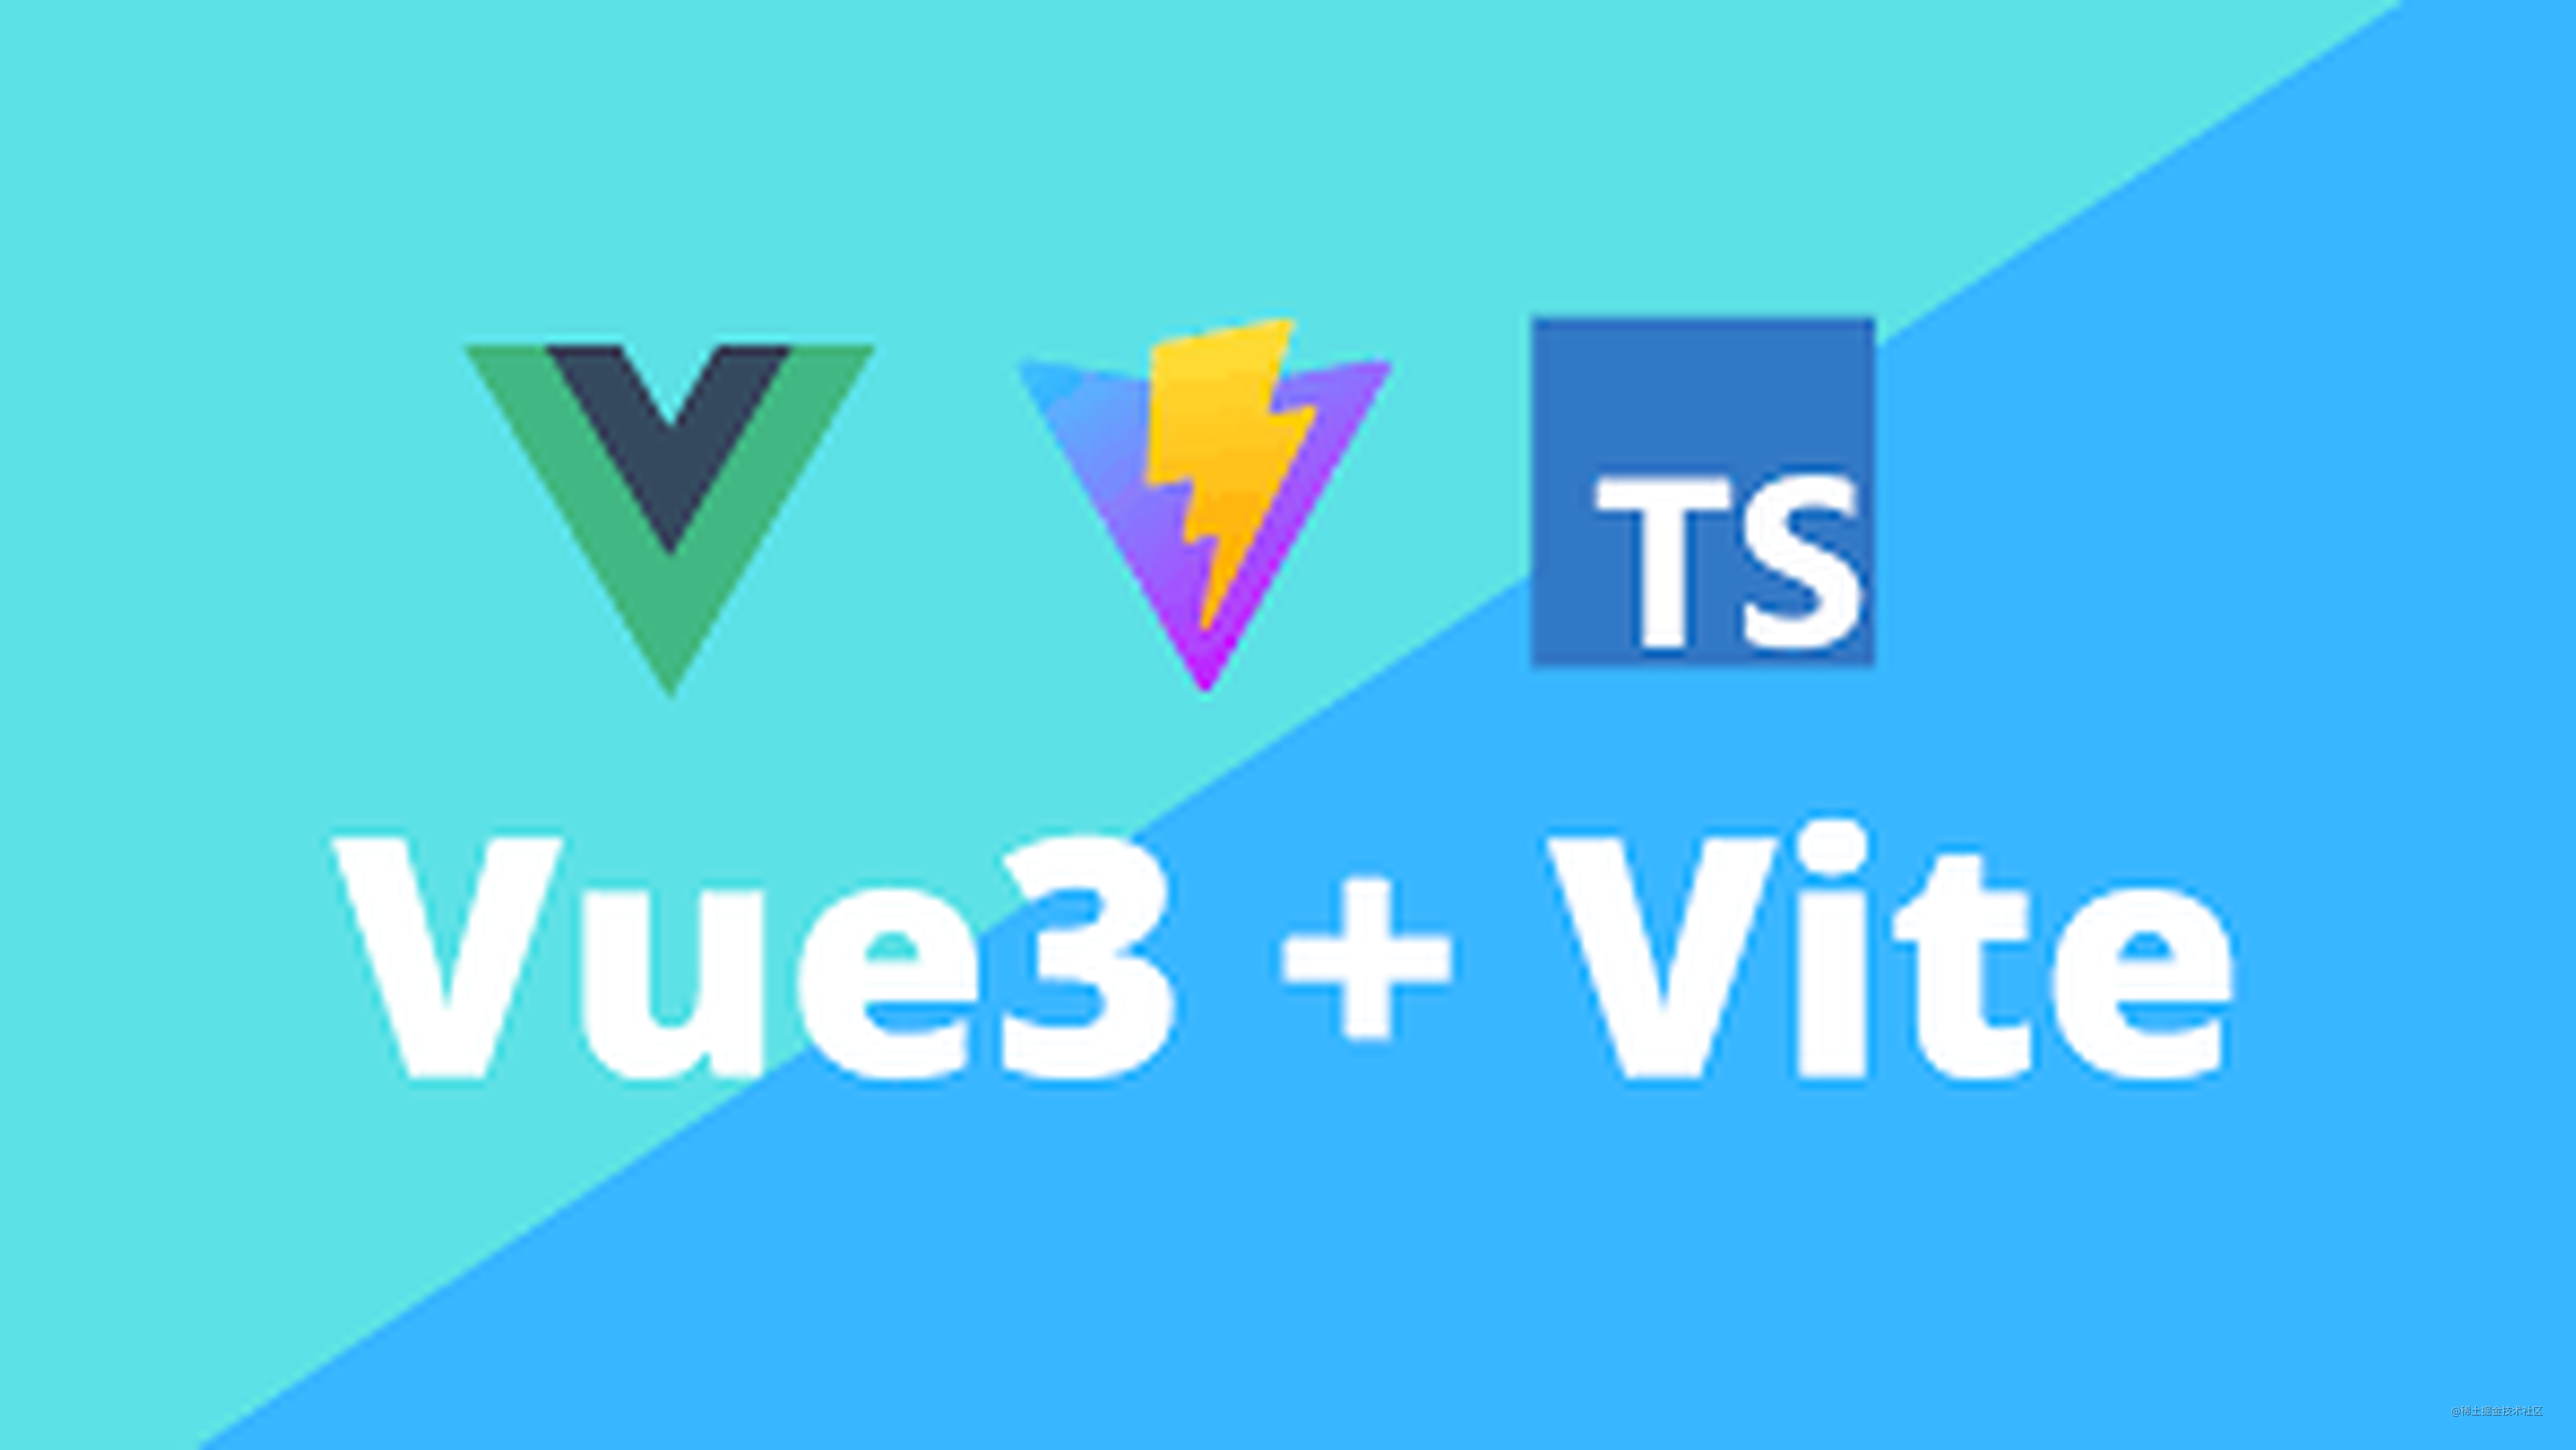 Vue3+Vite+TS+Eslint（Airbnb规则）搭建生产项目，踩坑详记（三）：引入Element-plus，解决字体文件404问题